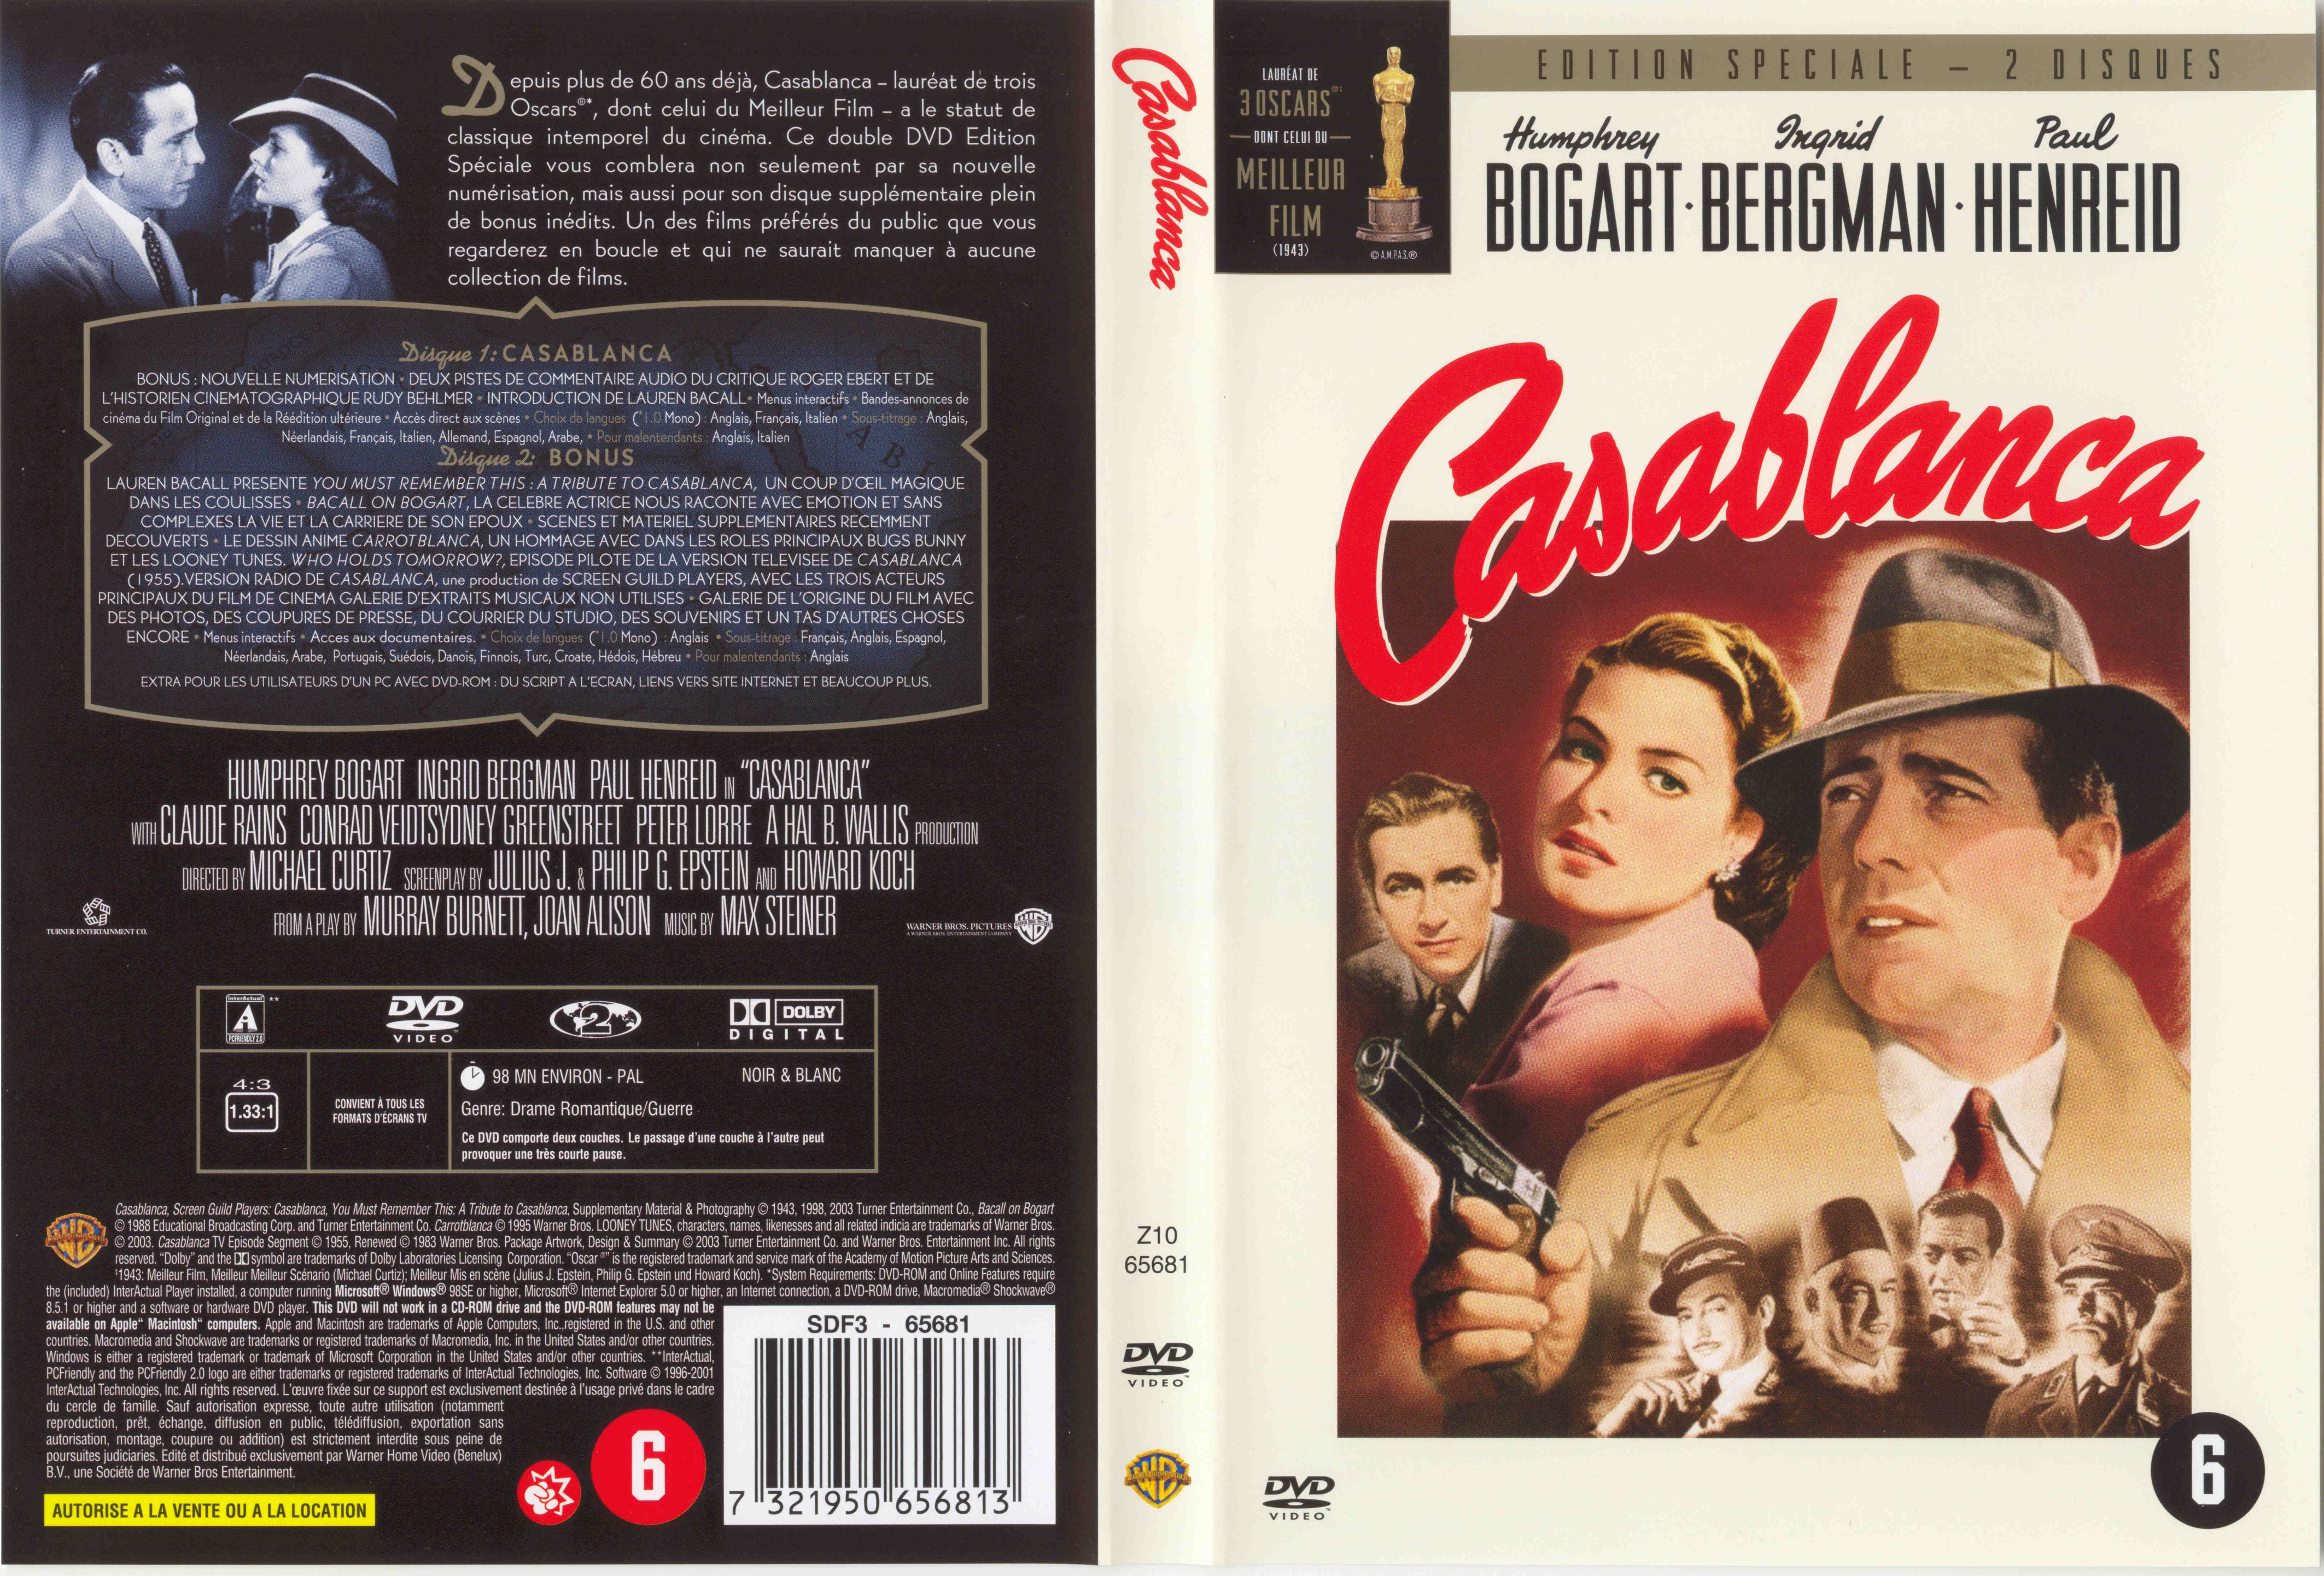 Jaquette DVD Casablanca